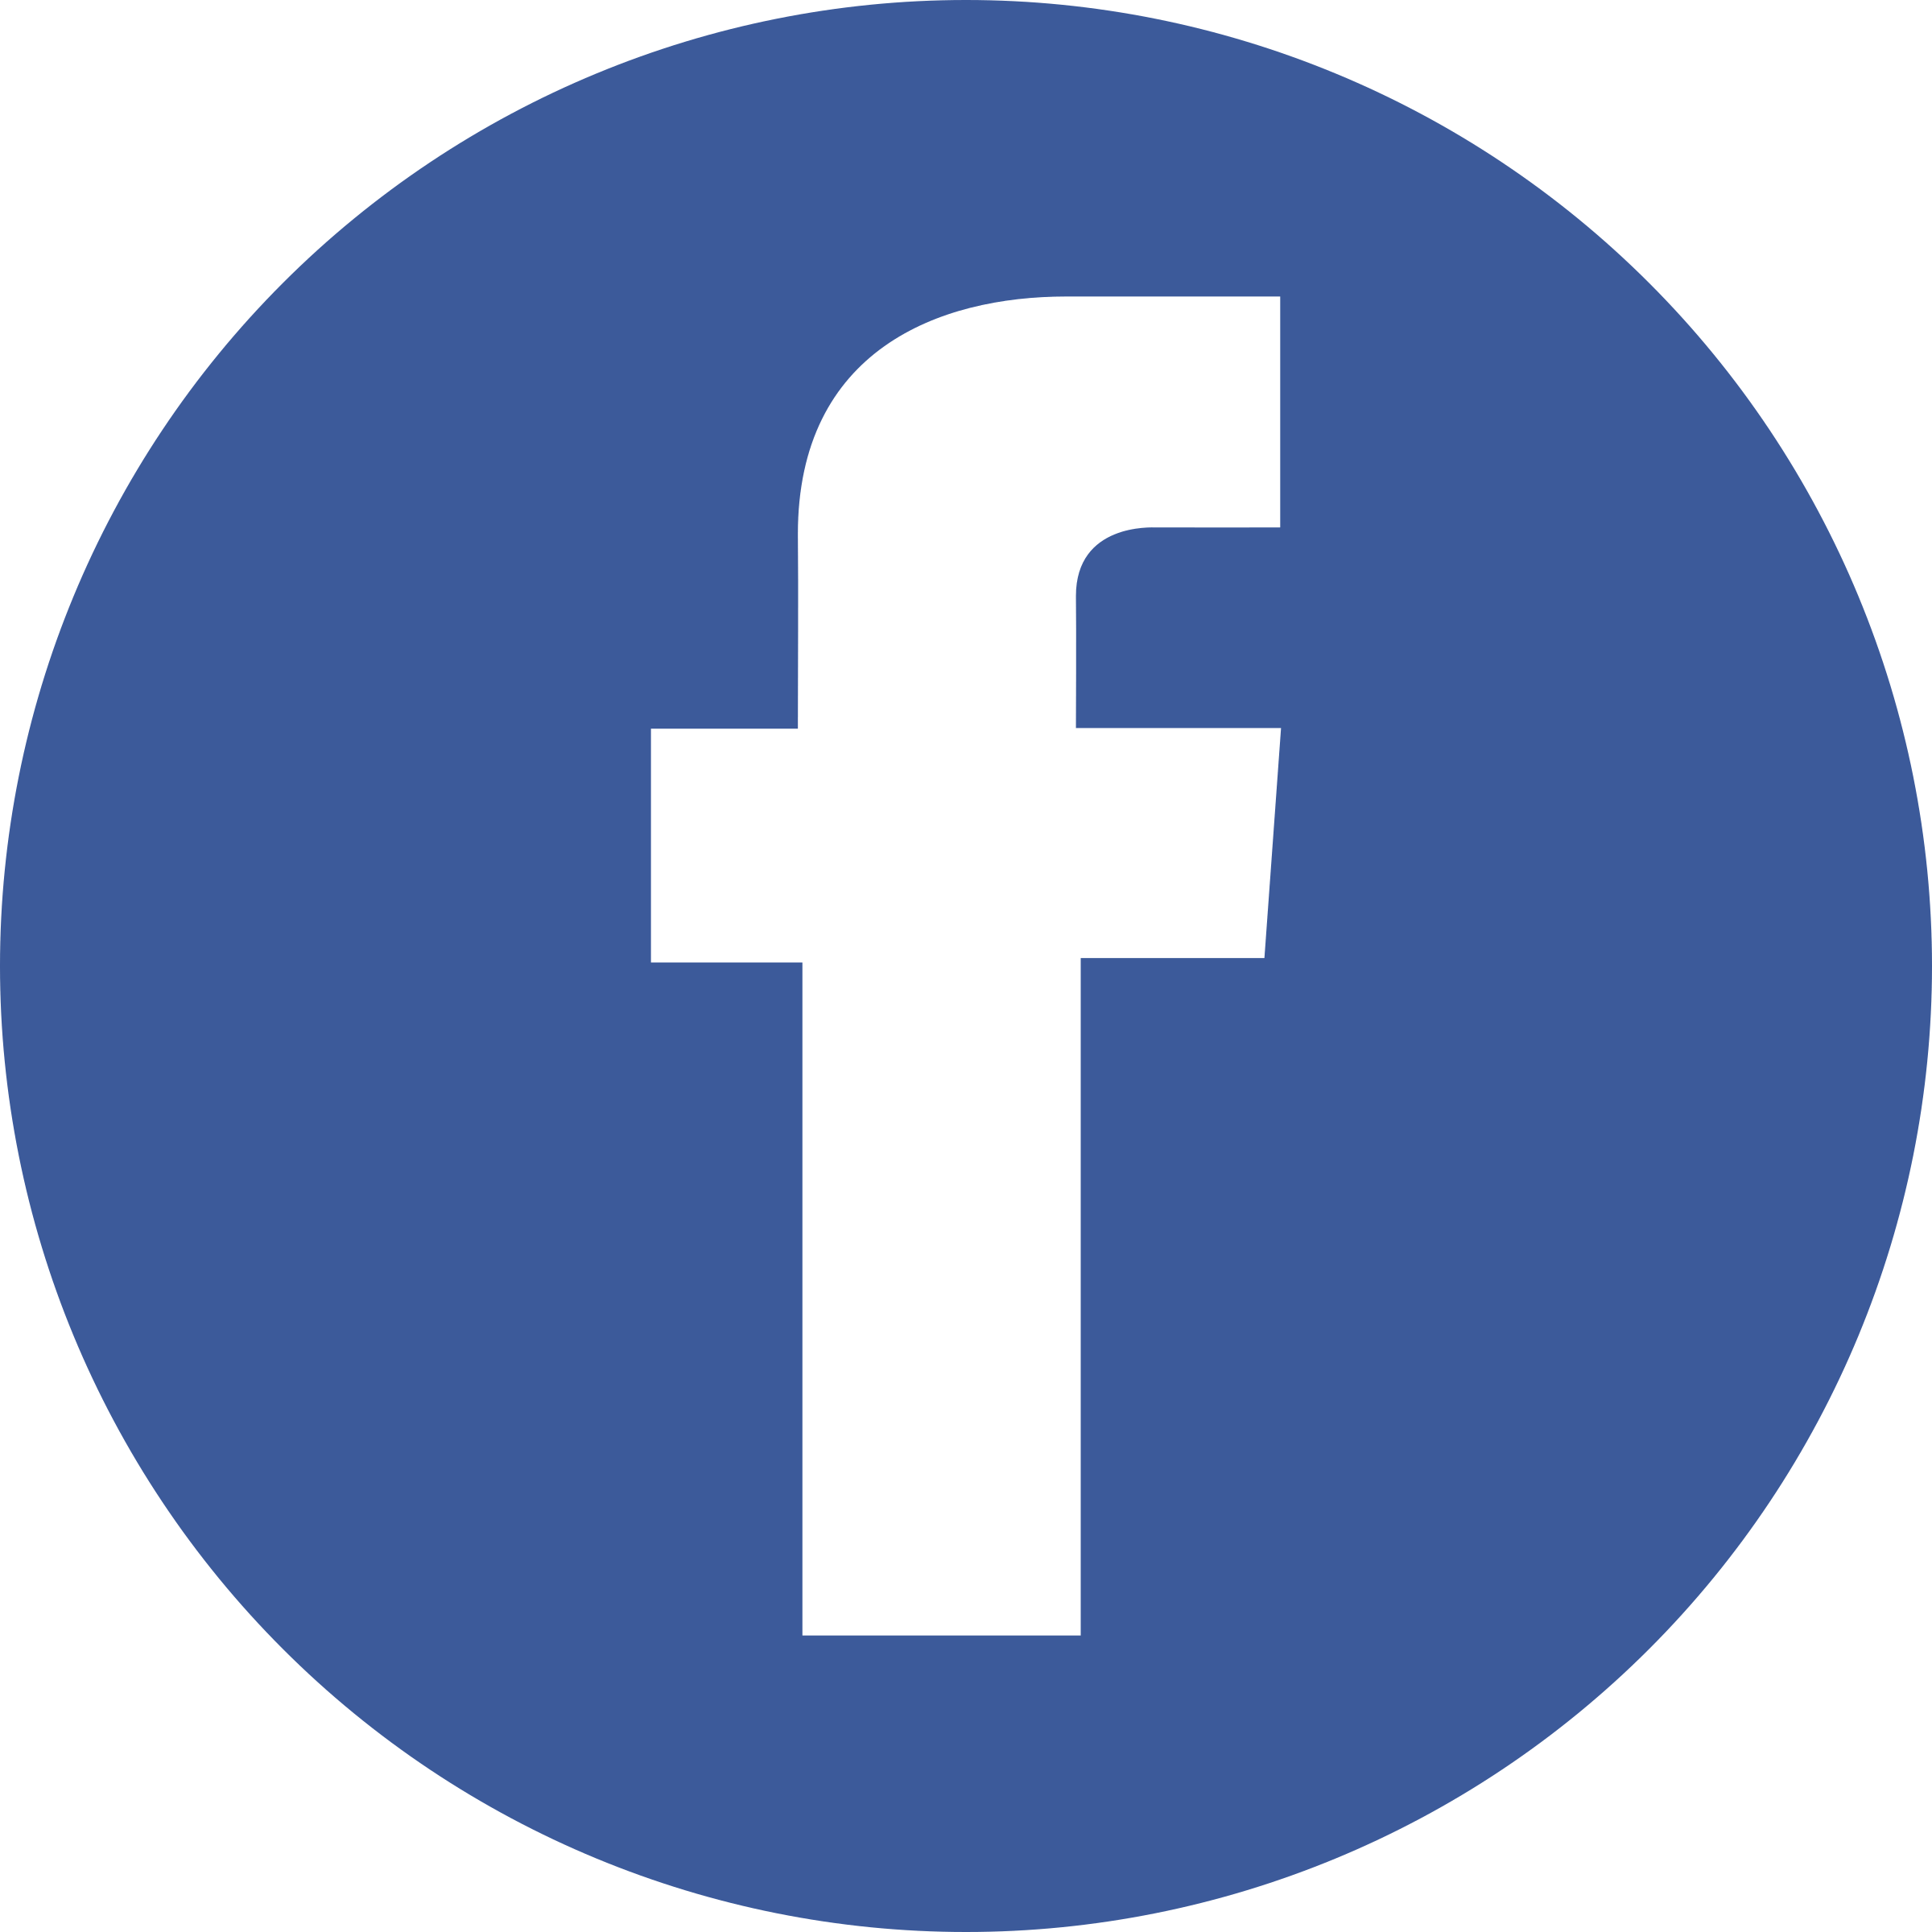 Fecabook Logo - Facebook Logo PNG Transparent & SVG Vector